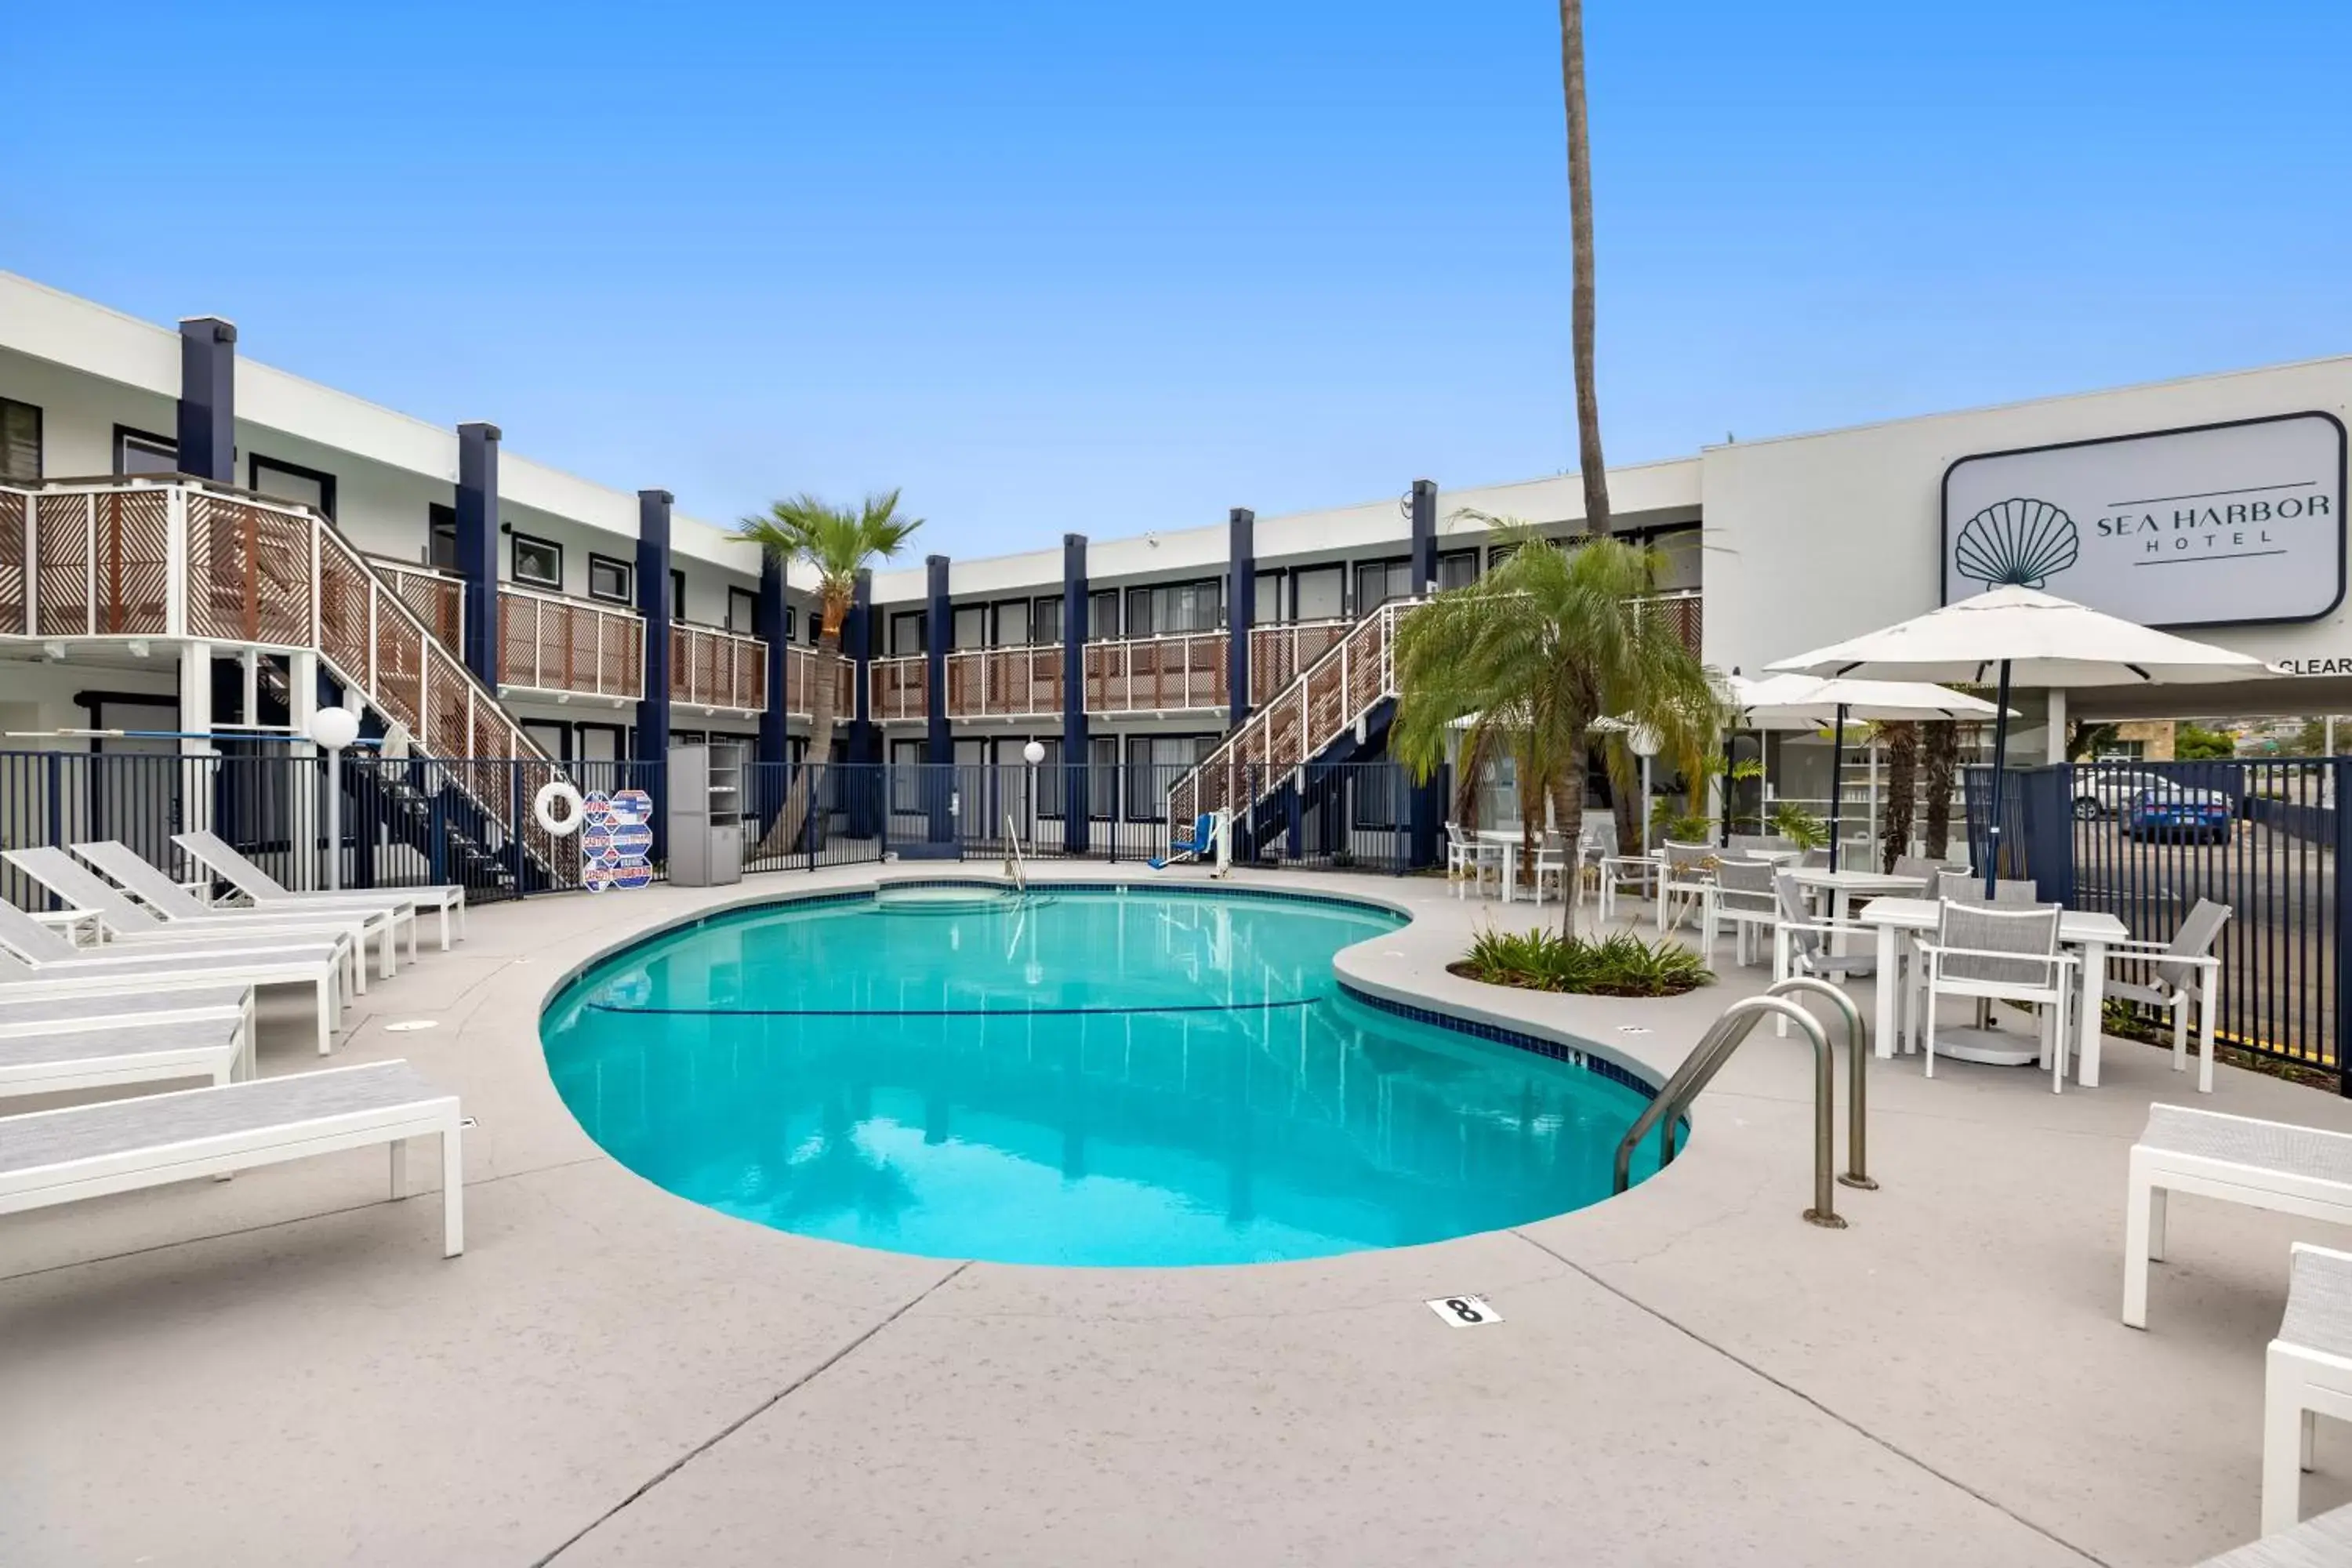 Swimming Pool in Sea Harbor Hotel - San Diego